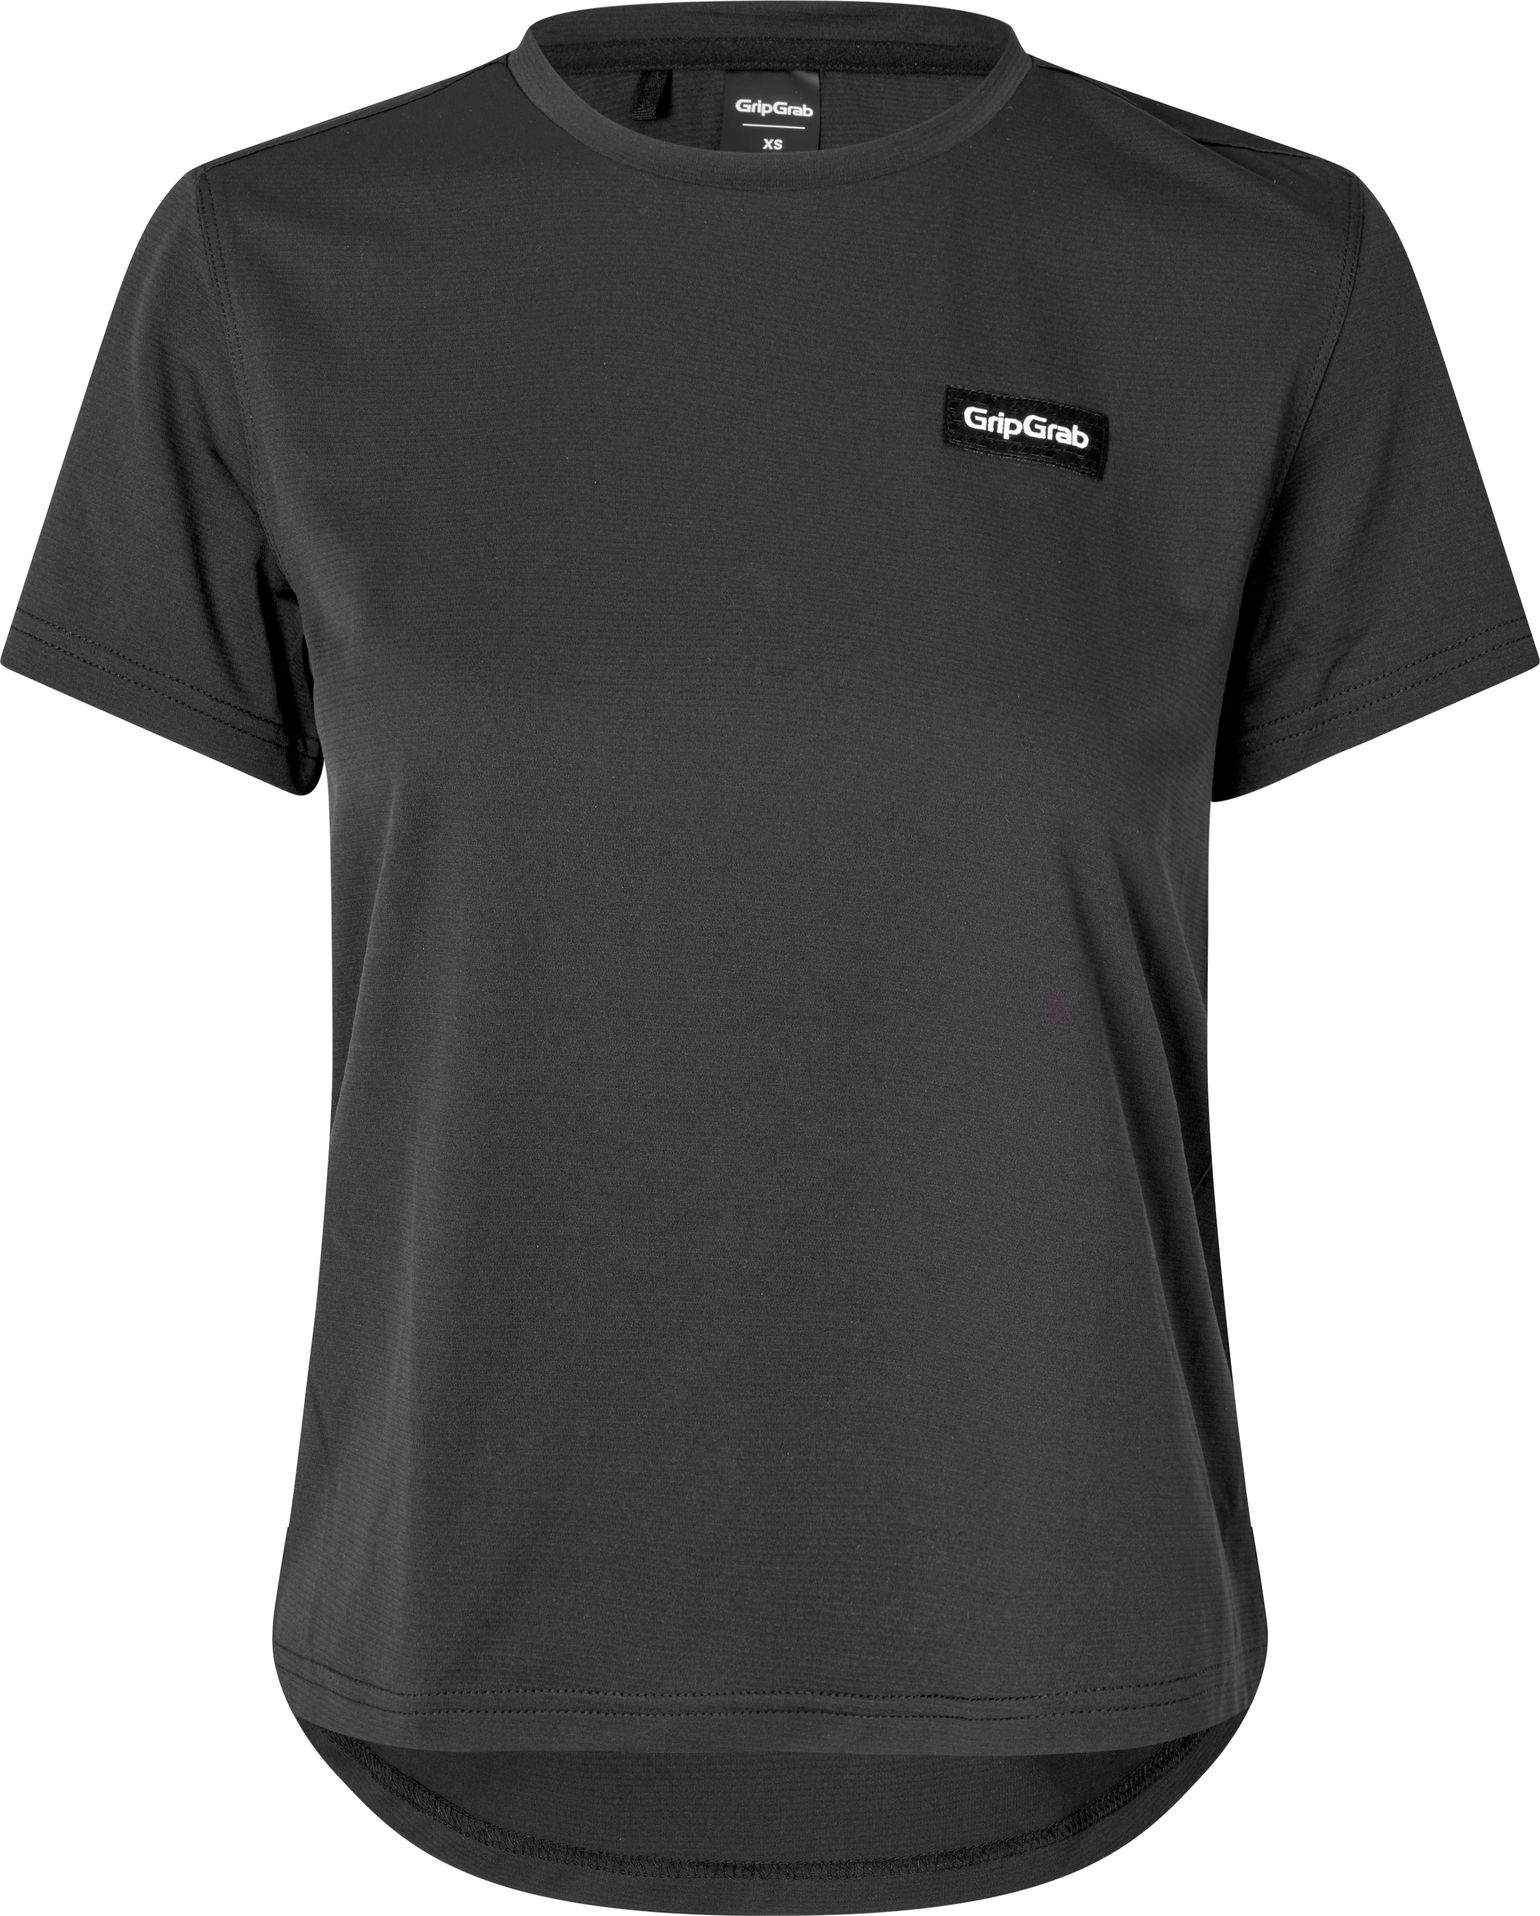 Gripgrab Women's Flow Technical T-Shirt Black